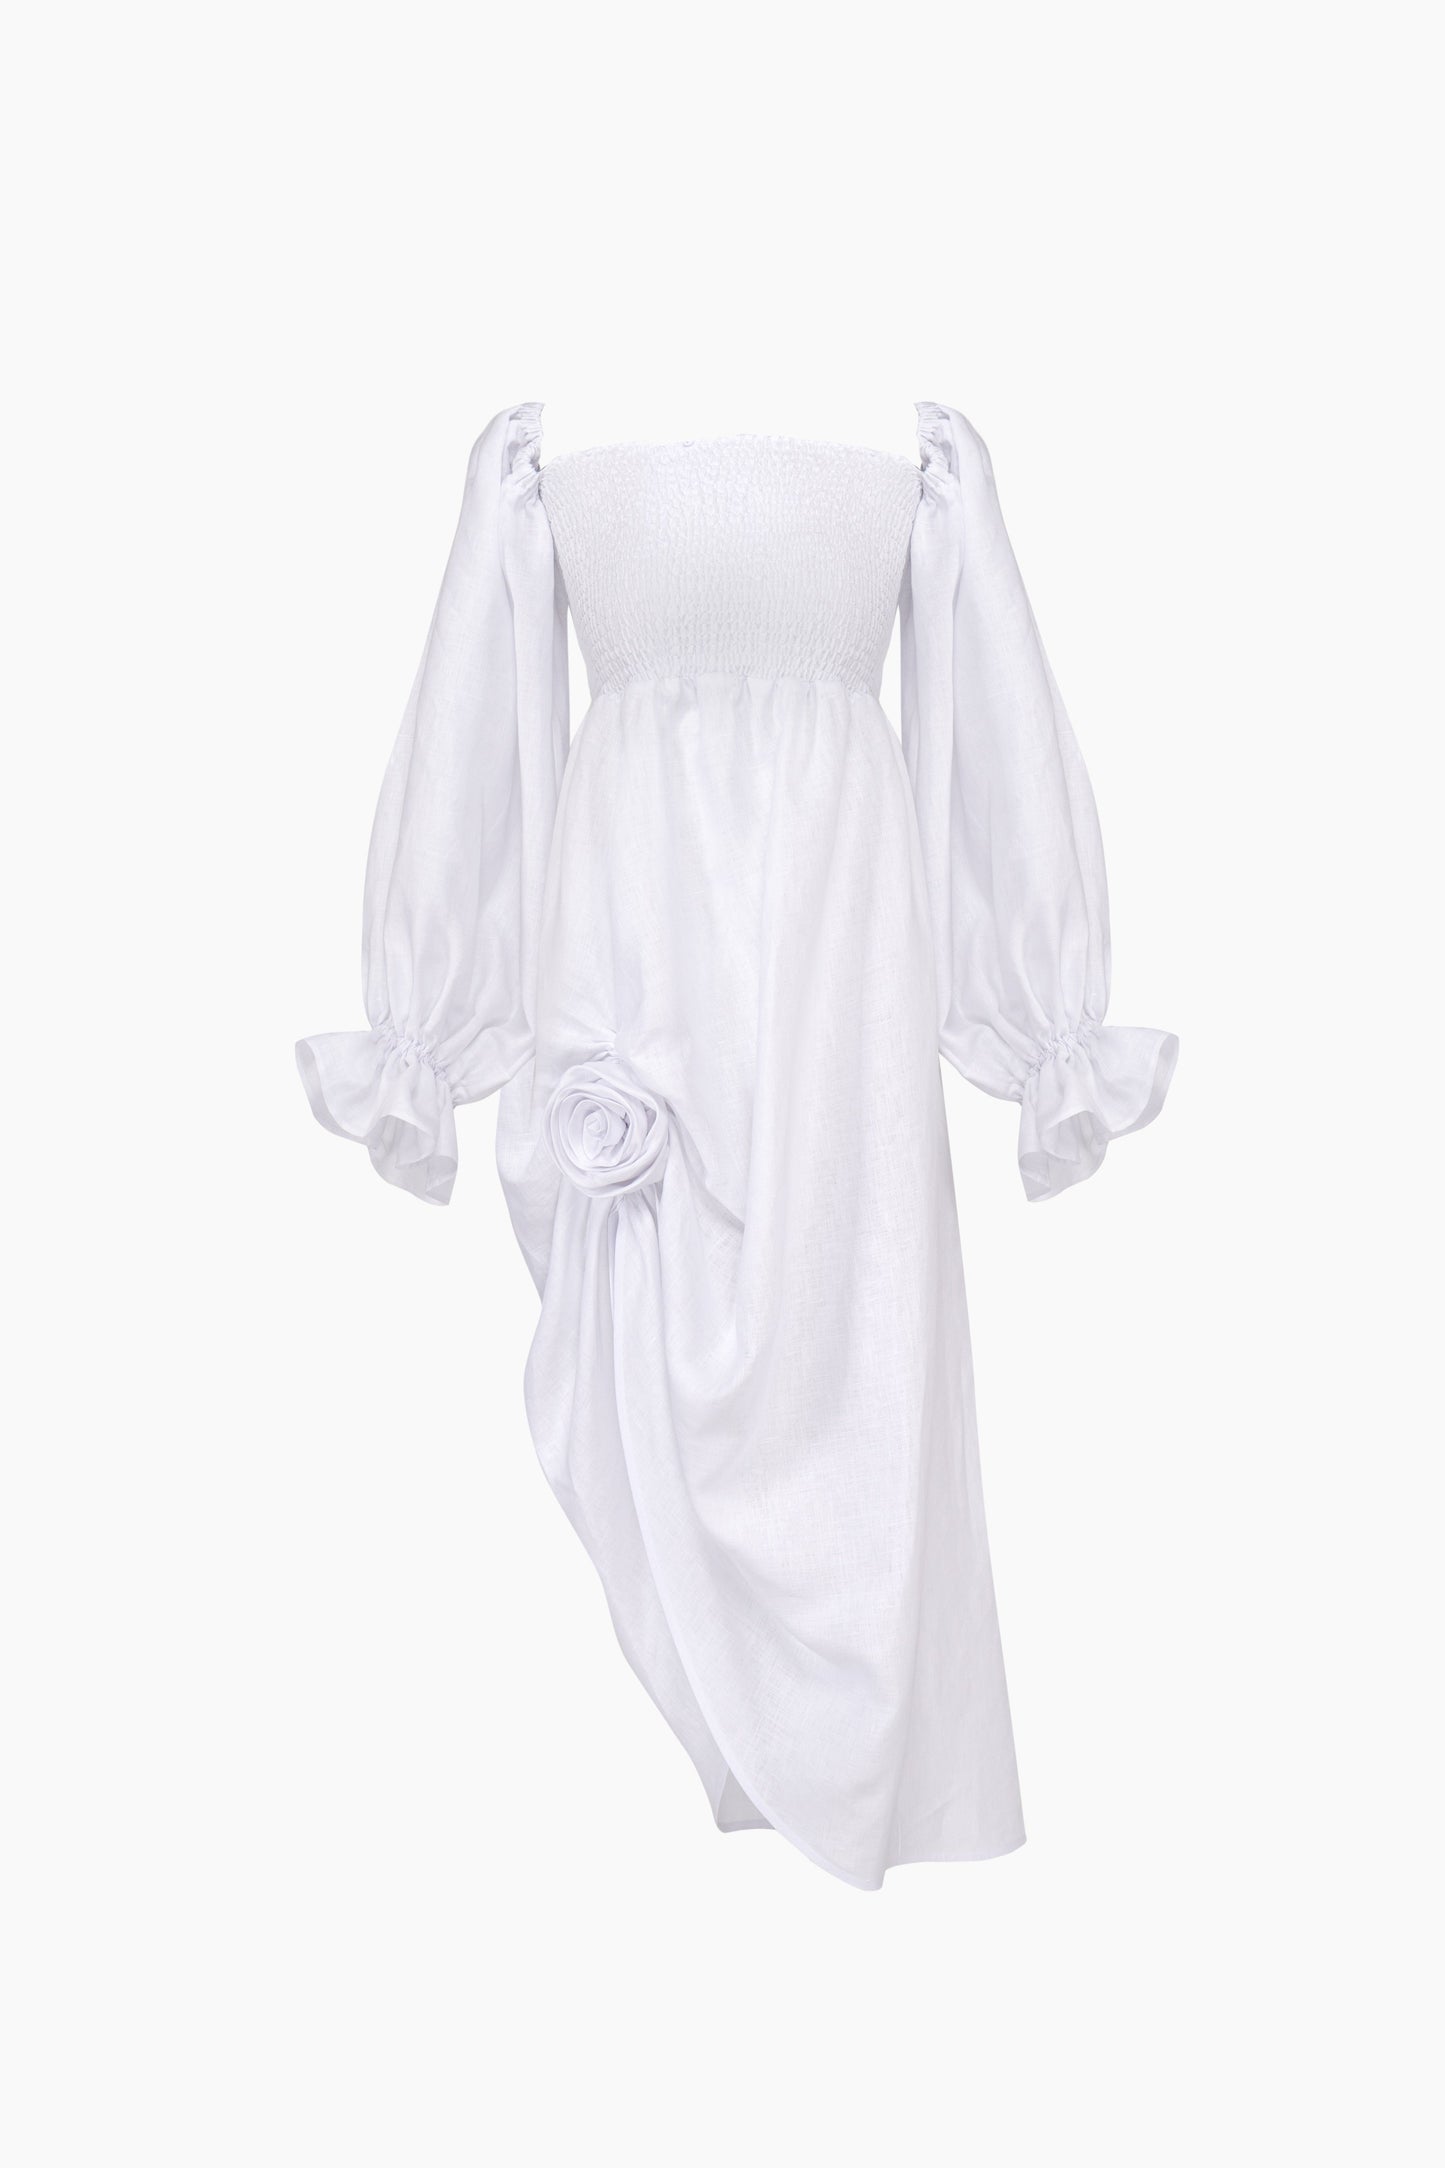 Atlanta Linen Dress with Rose Detail in White